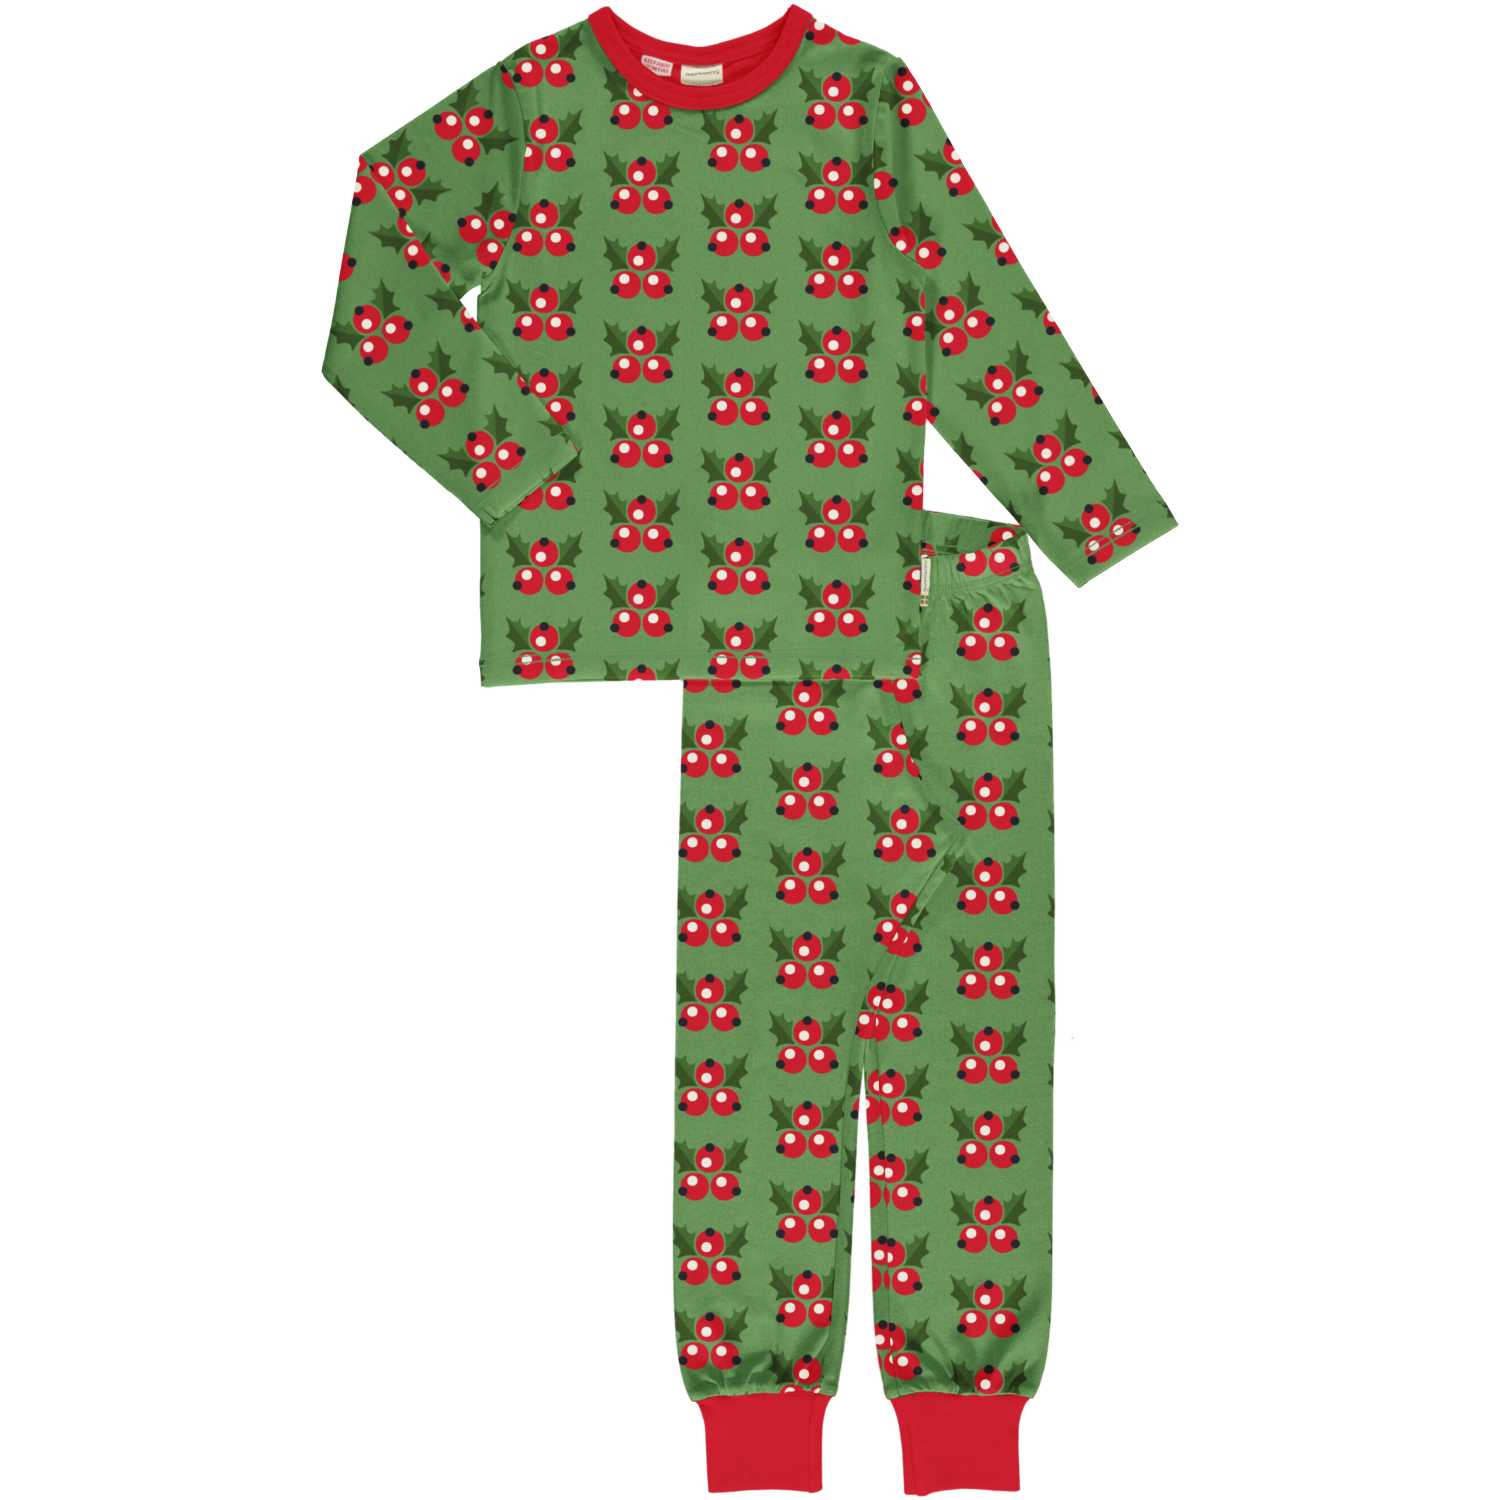 Maxomorra Pyjama Set LS Christmas Holly